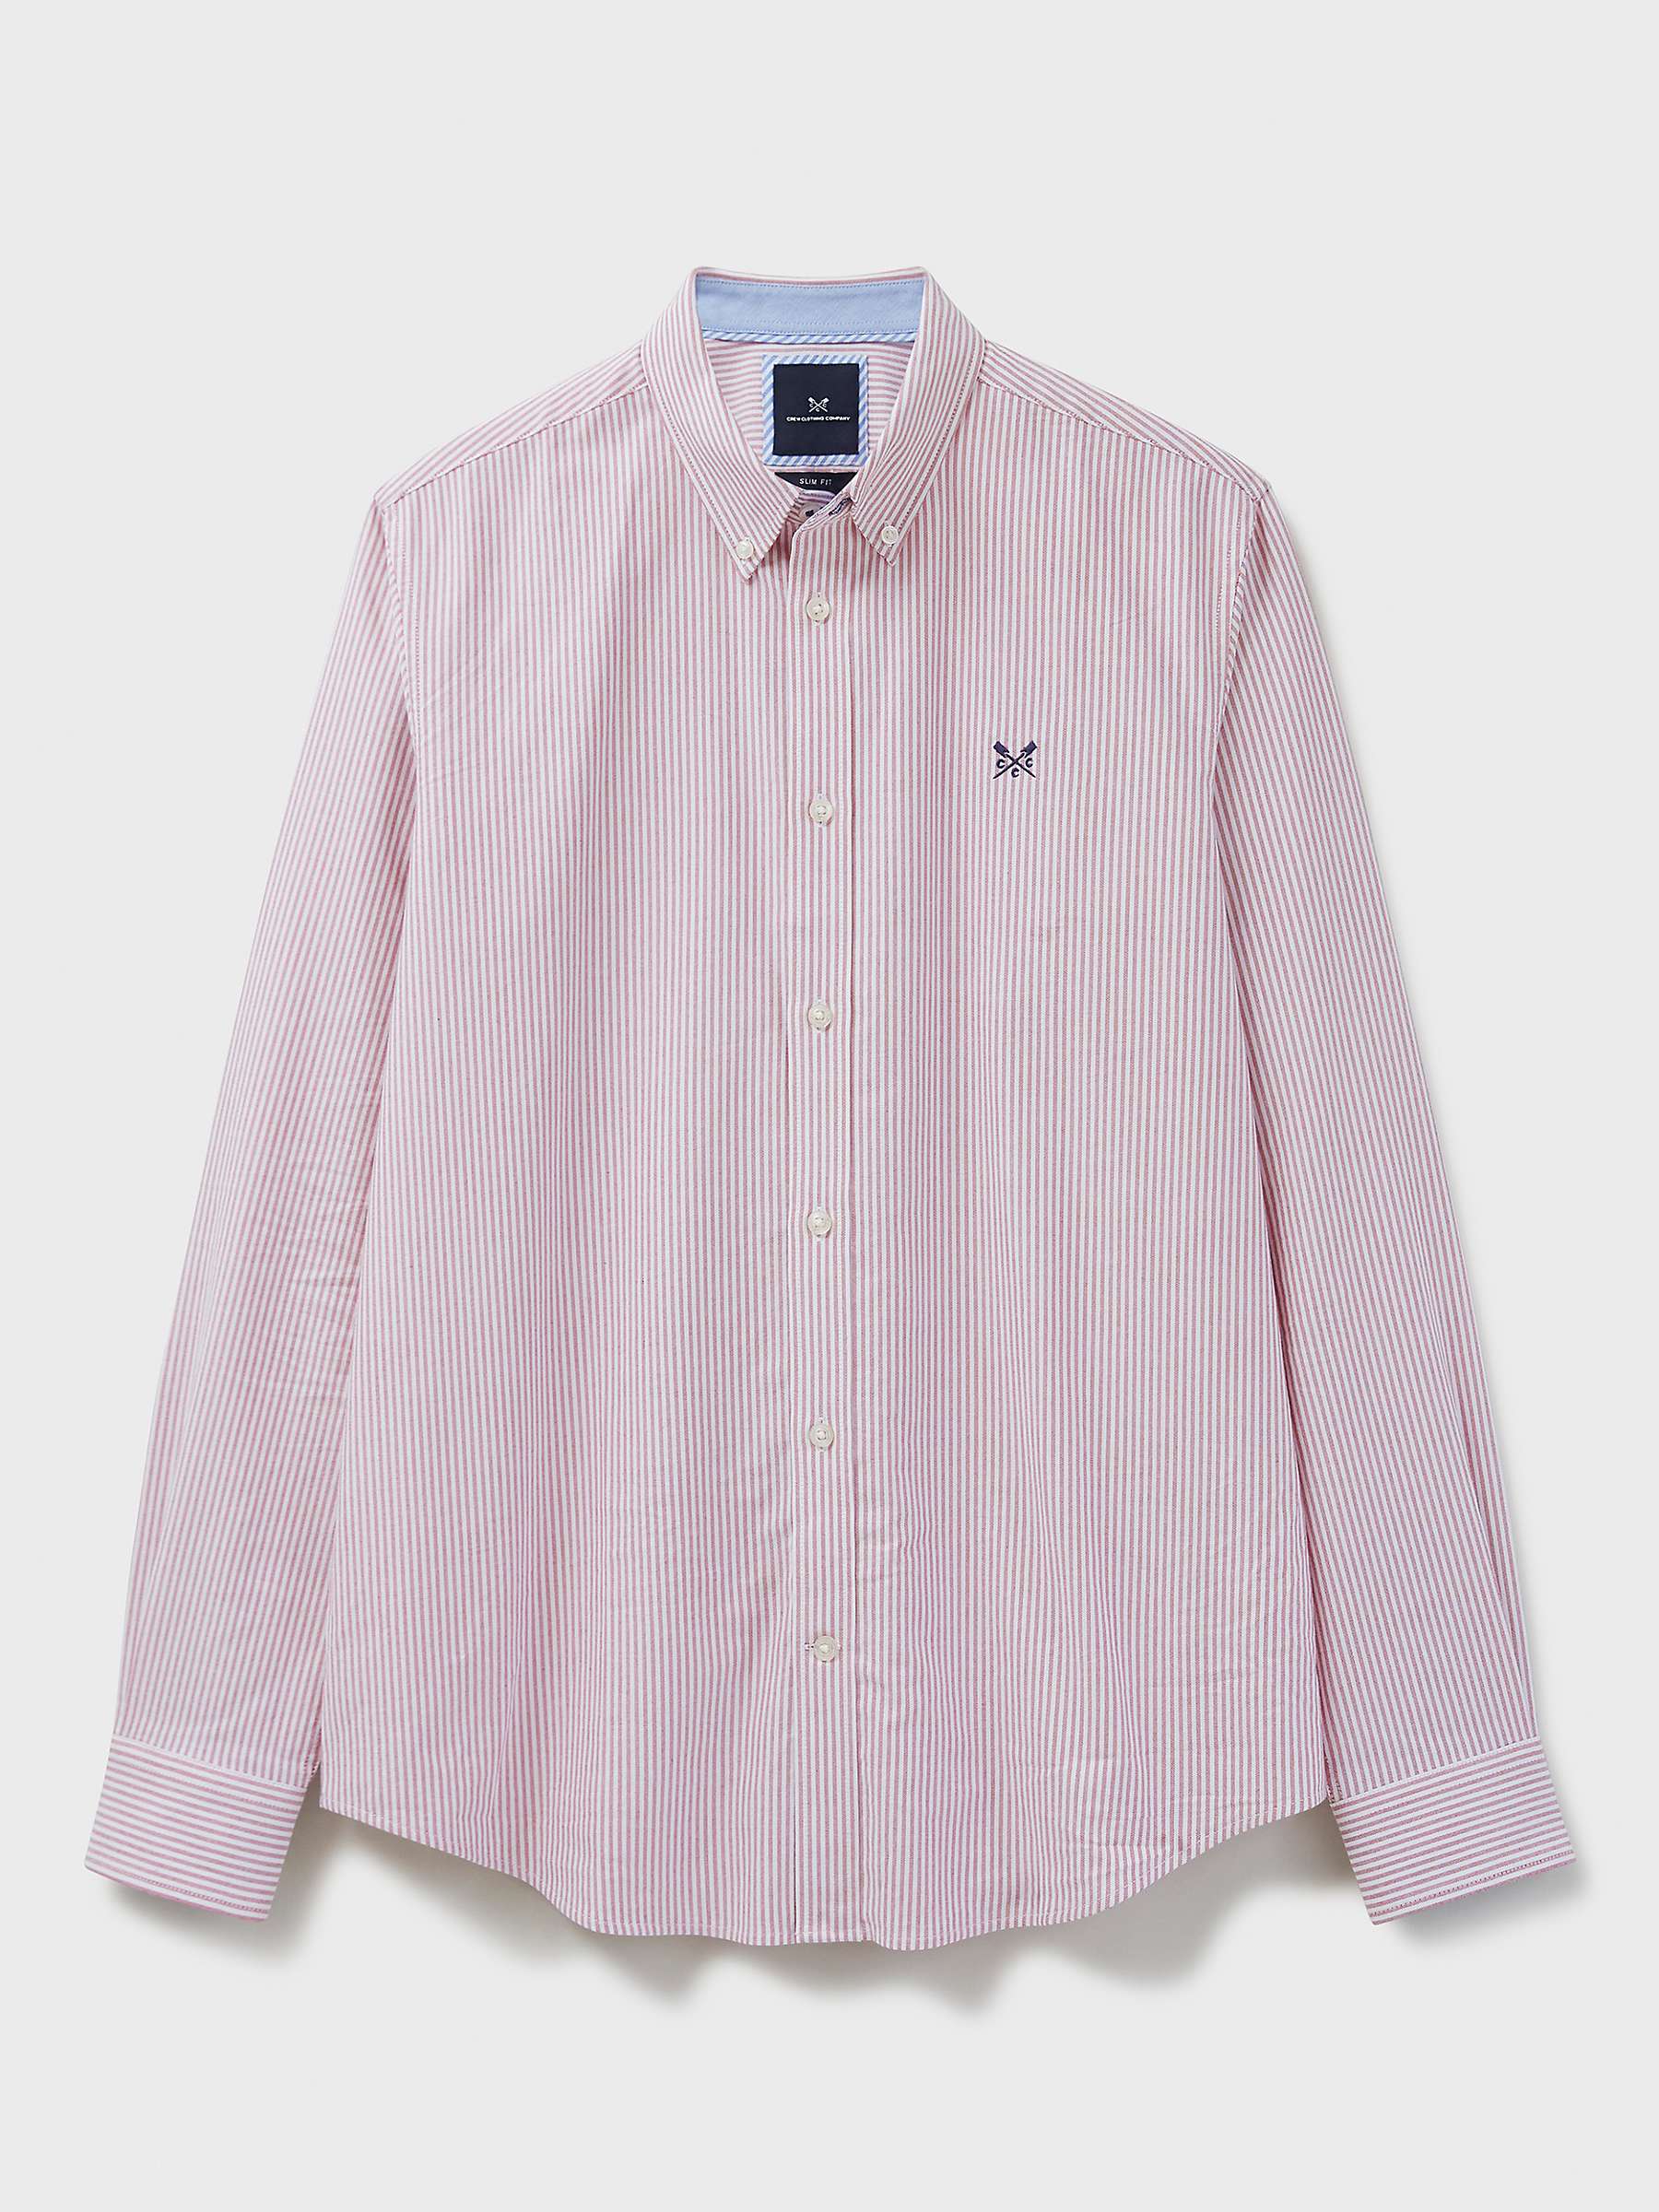 Buy Crew Clothing Oxford Stripe Cotton Shirt Online at johnlewis.com